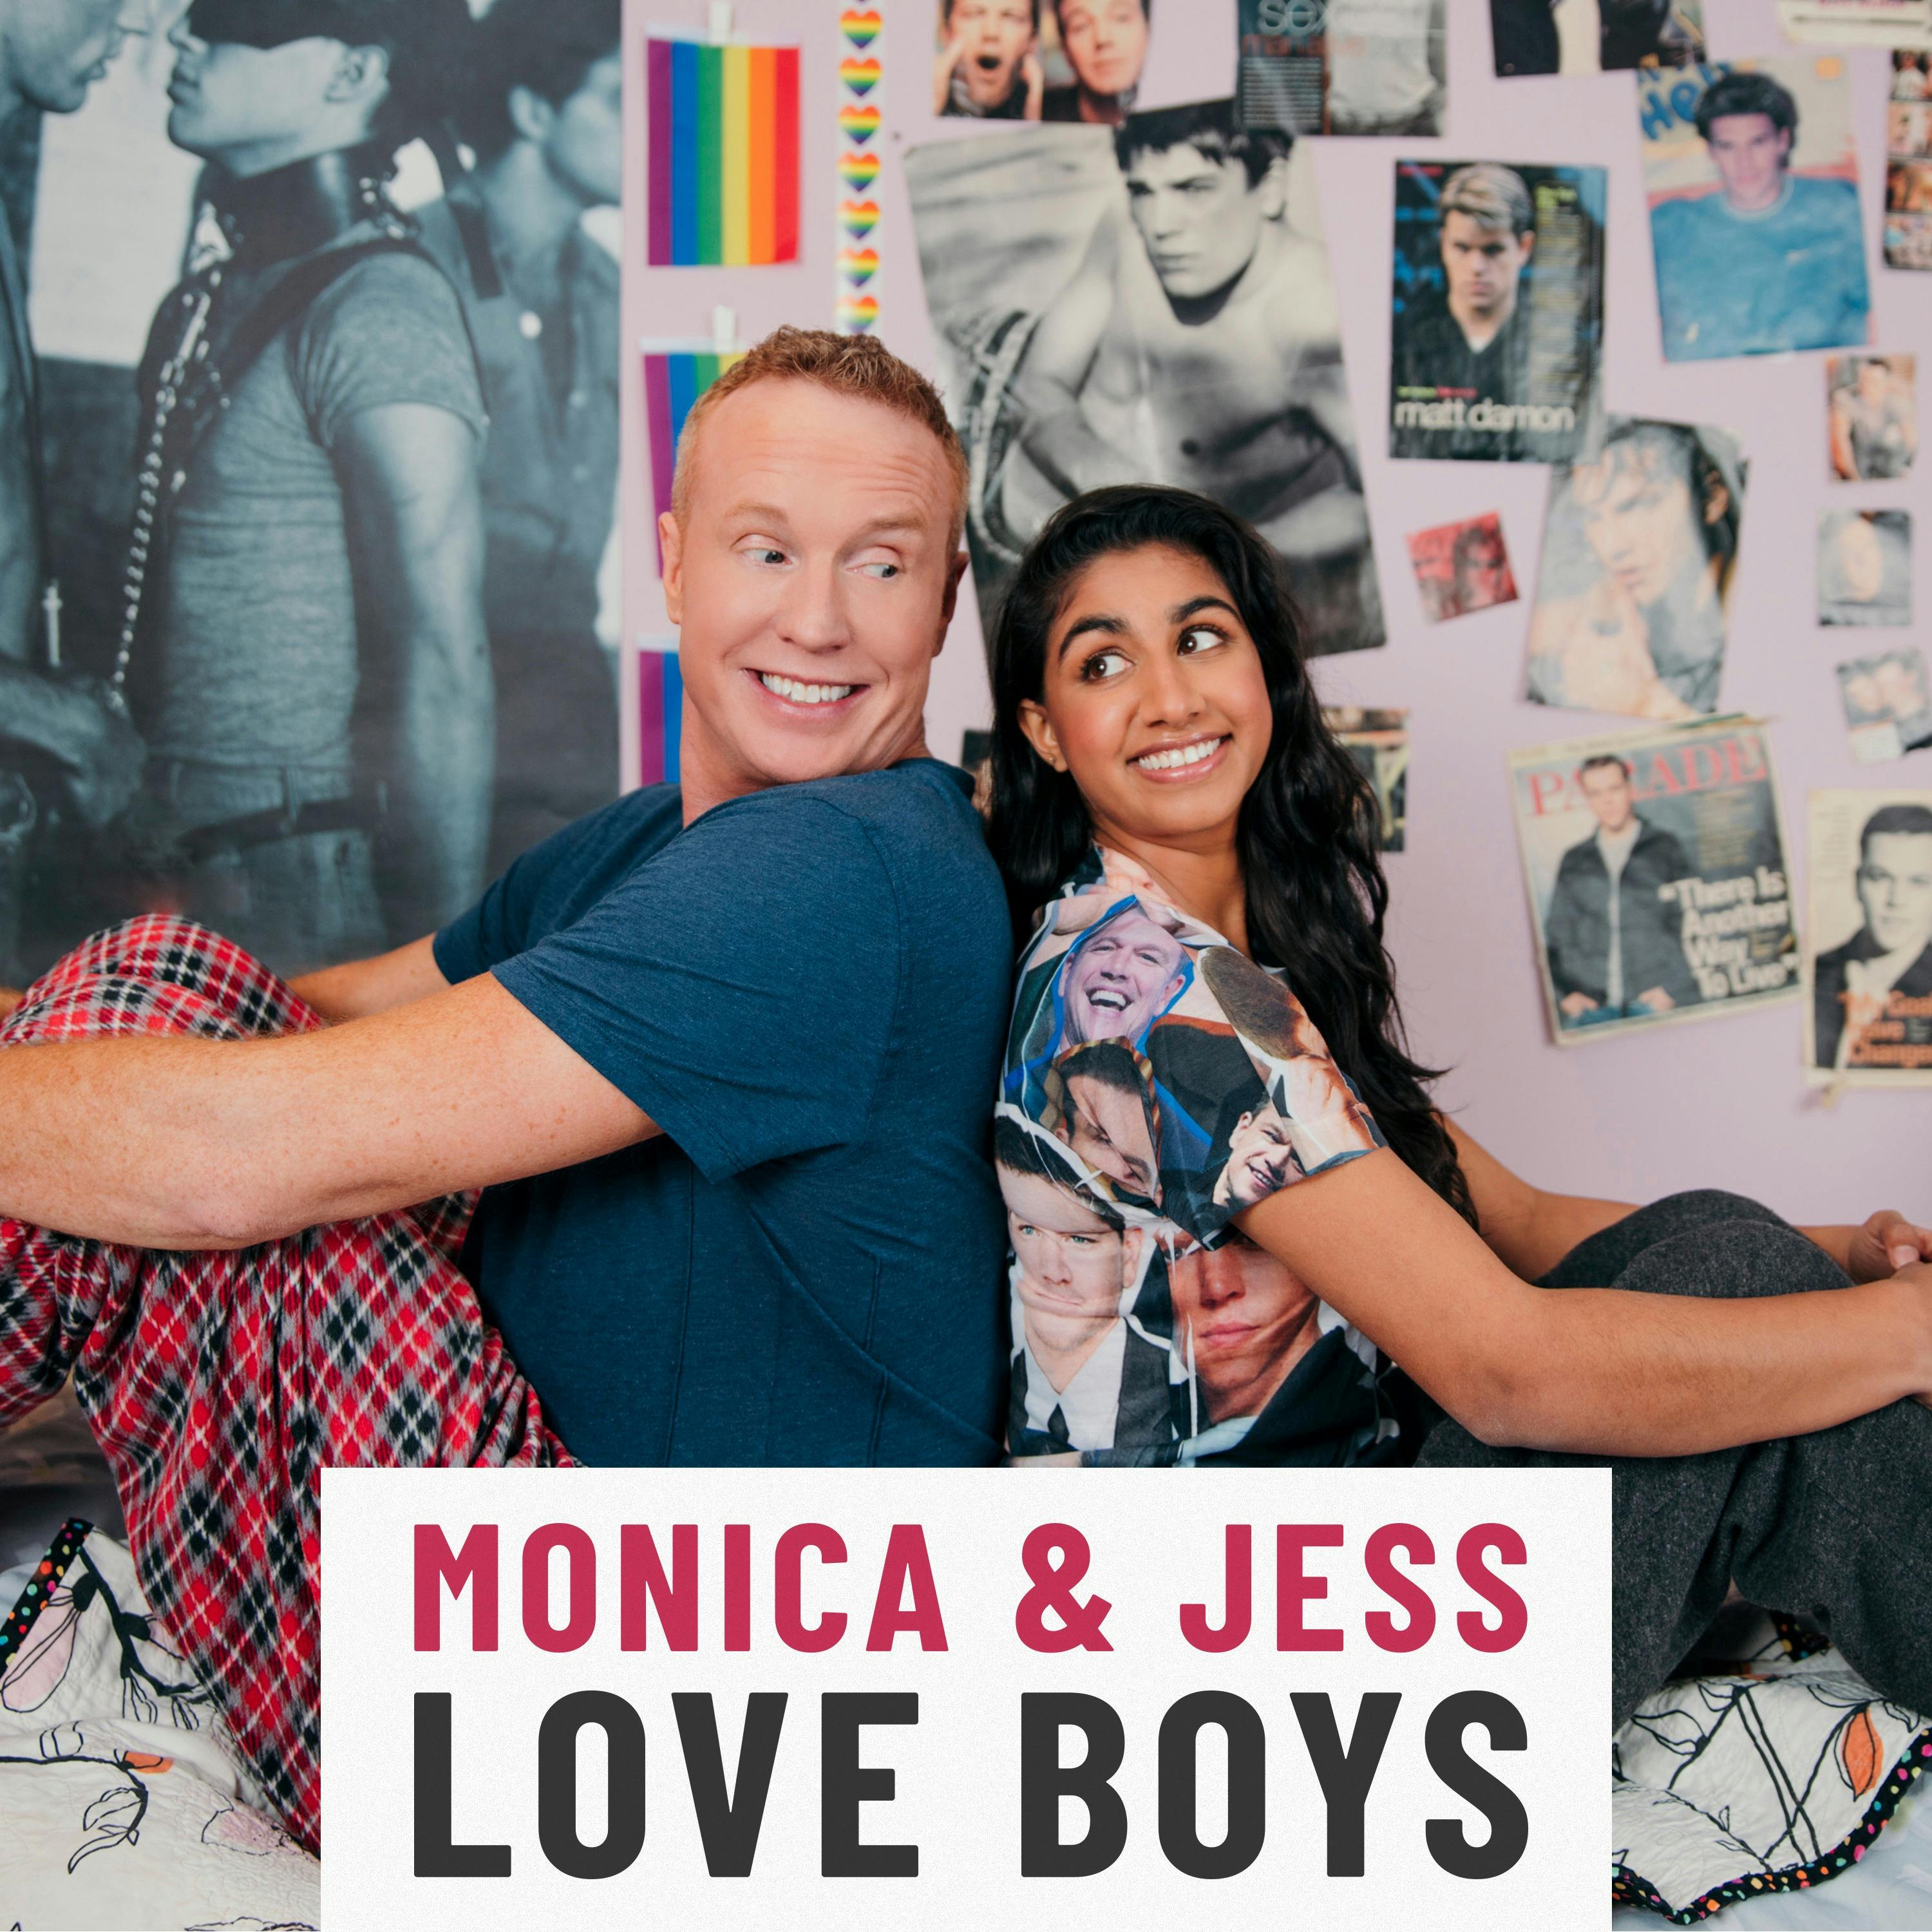 Introducing: Monica & Jess Love Boys